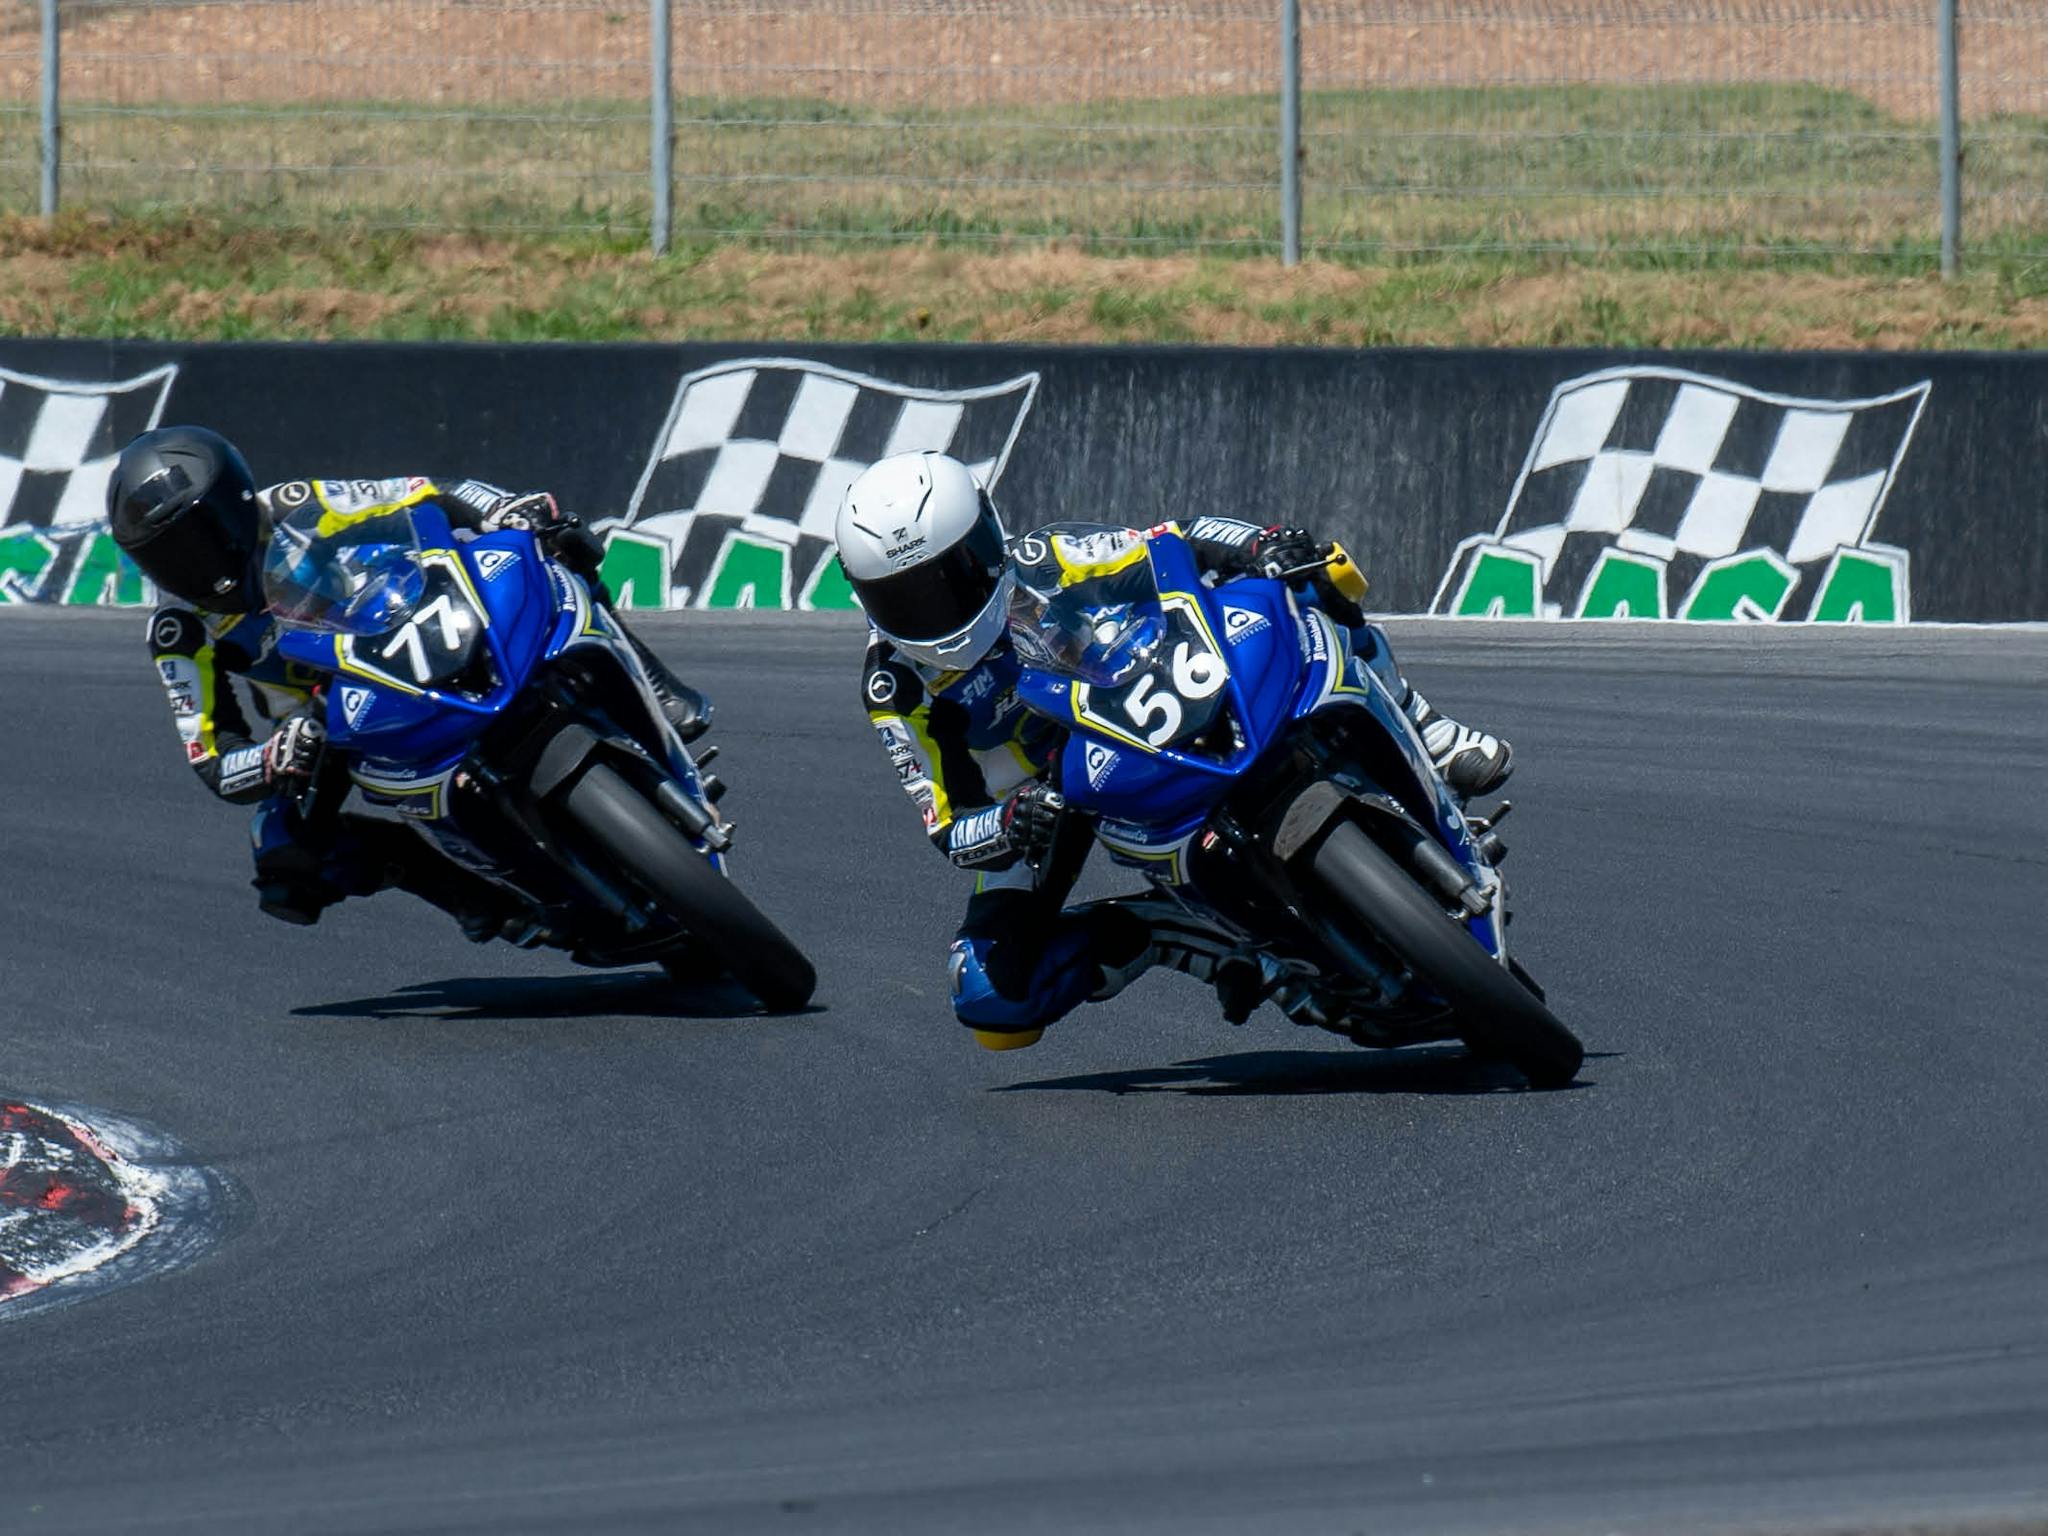 Two motorbikes racing around Winton Motor Raceway